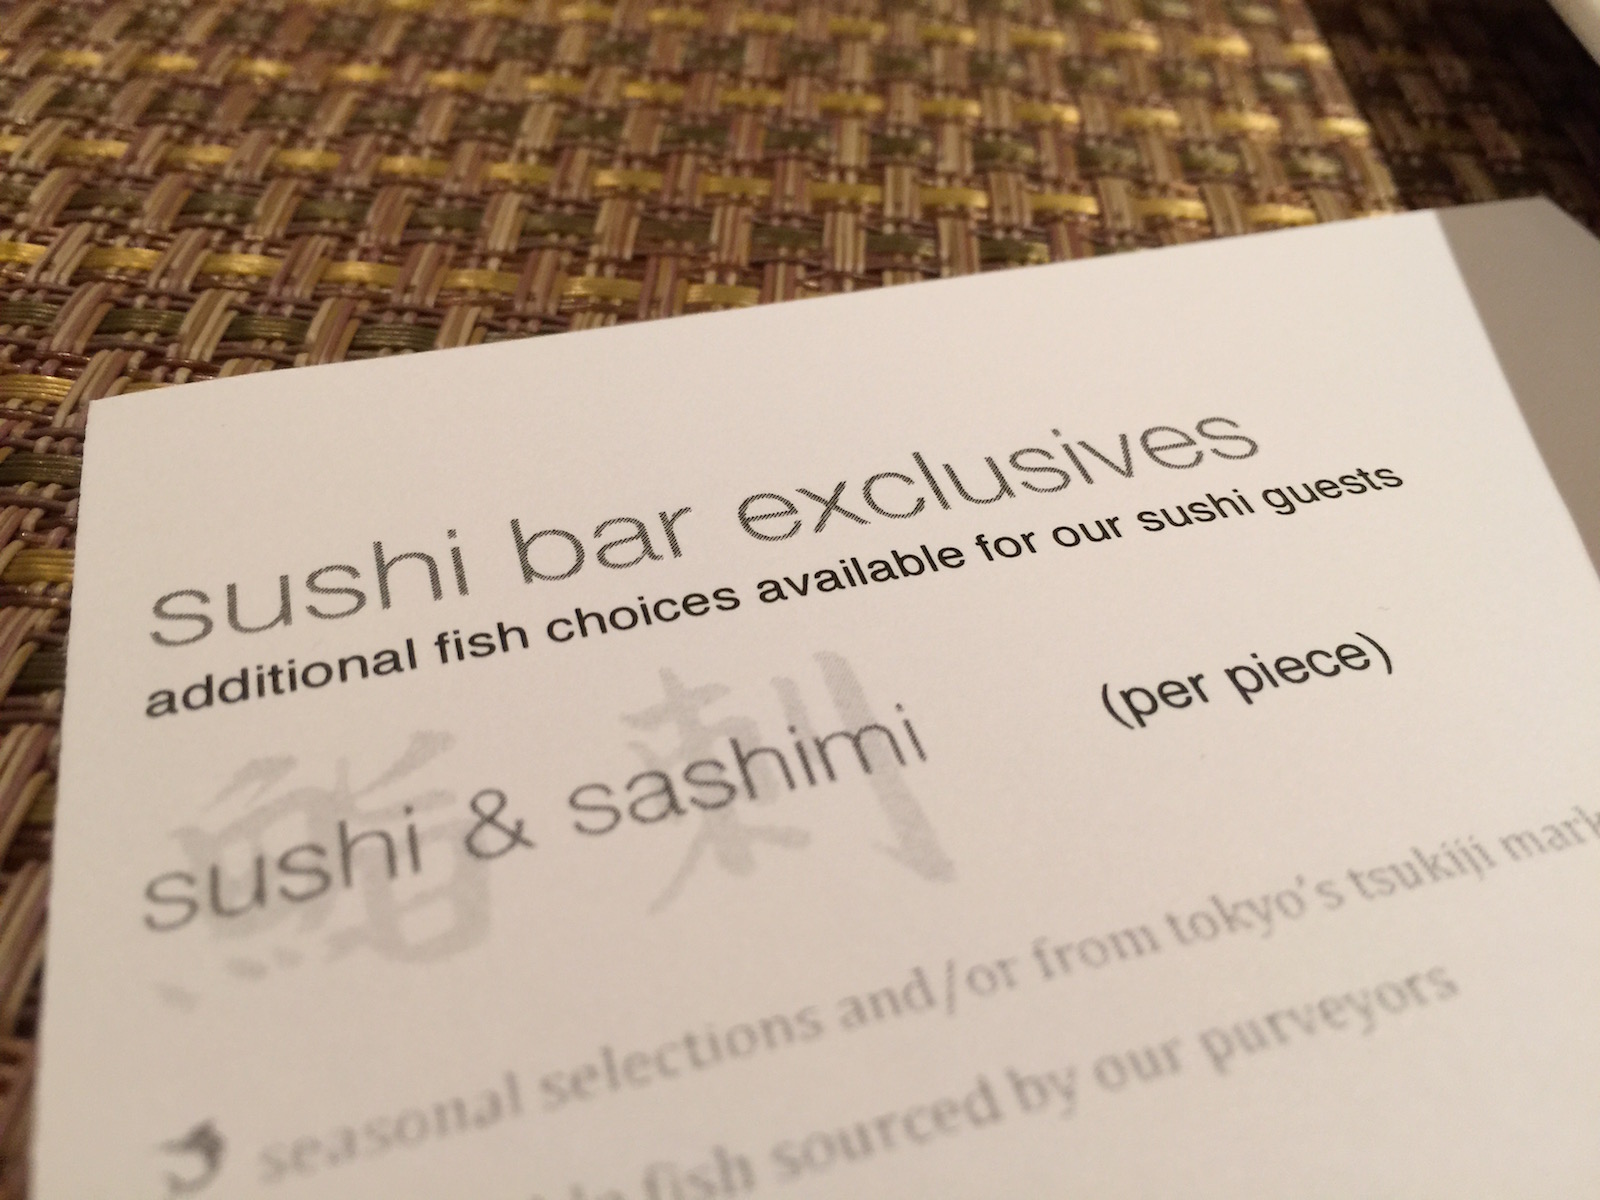 Sushi Ran - sushi bar exclusives